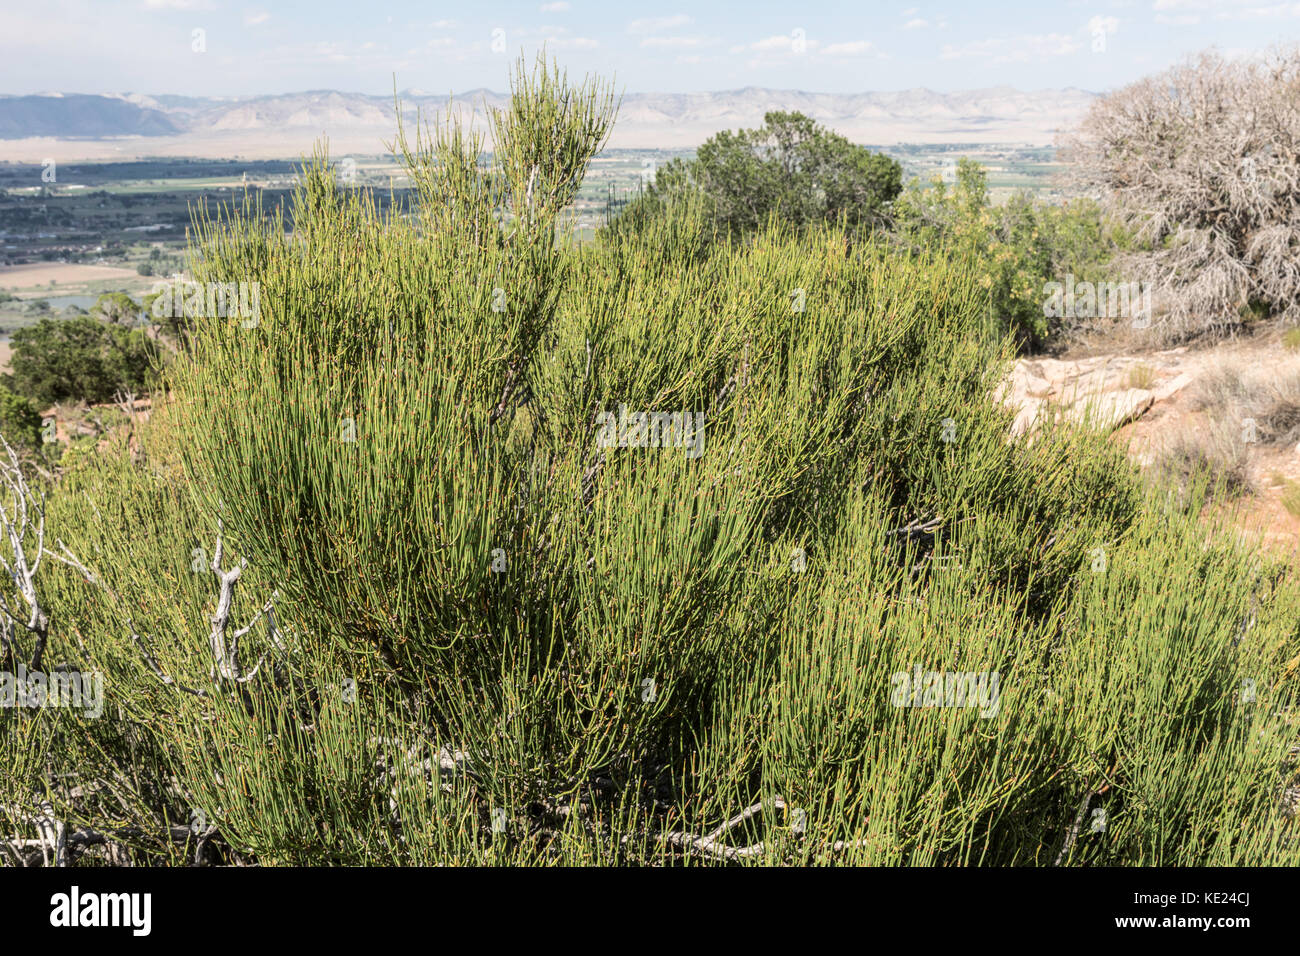 Mormon Tea Bush (Ephedra), Desert Southwest, USA Stock Photo